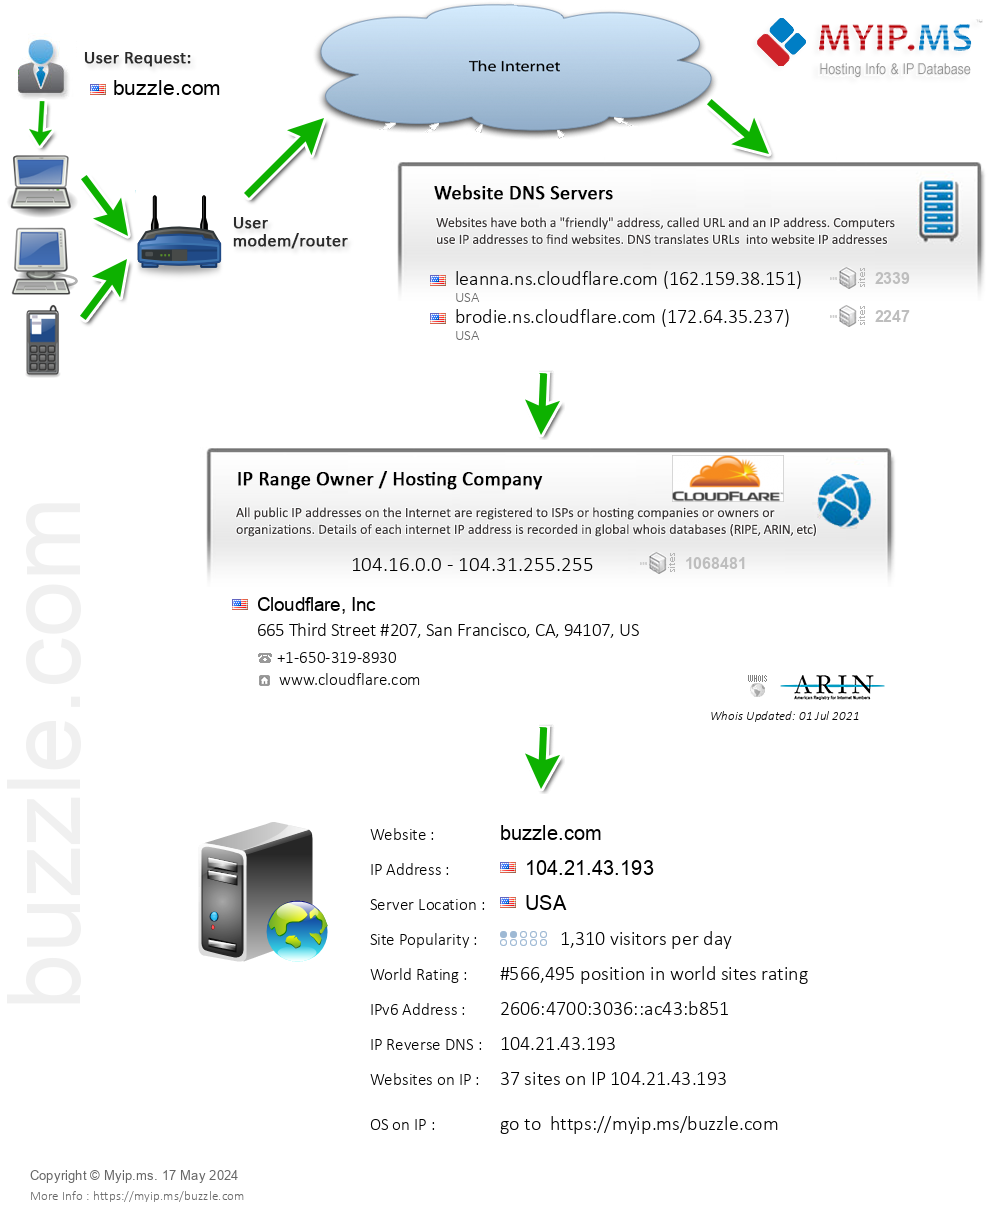 Buzzle.com - Website Hosting Visual IP Diagram